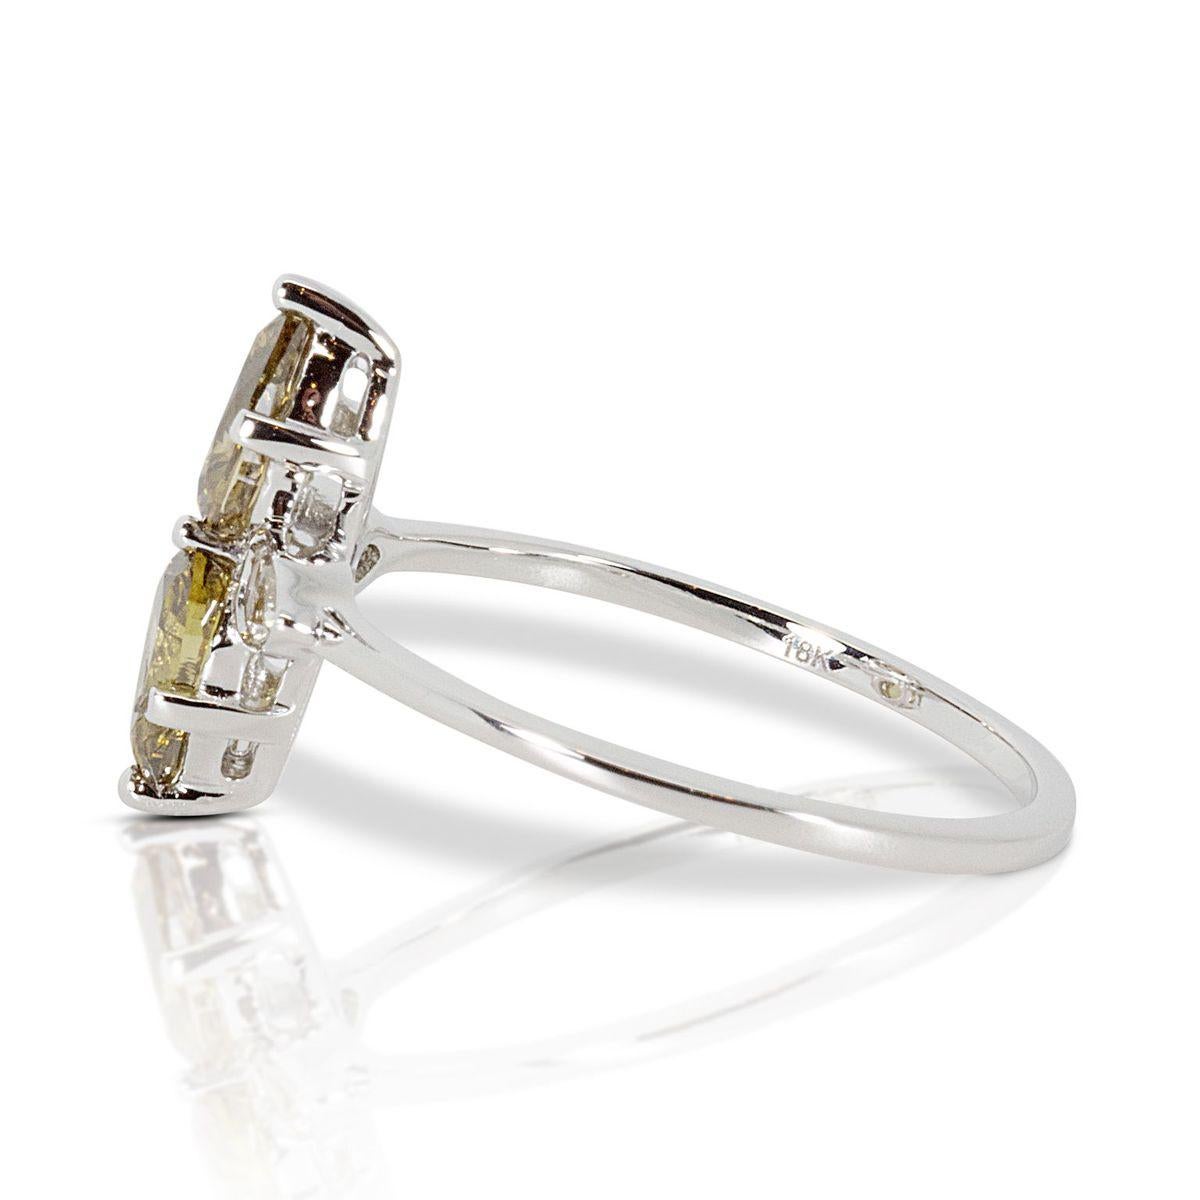 Women's Elegant 18k White Gold Ring with 1.13 ct Natural Diamonds- NGI cert For Sale